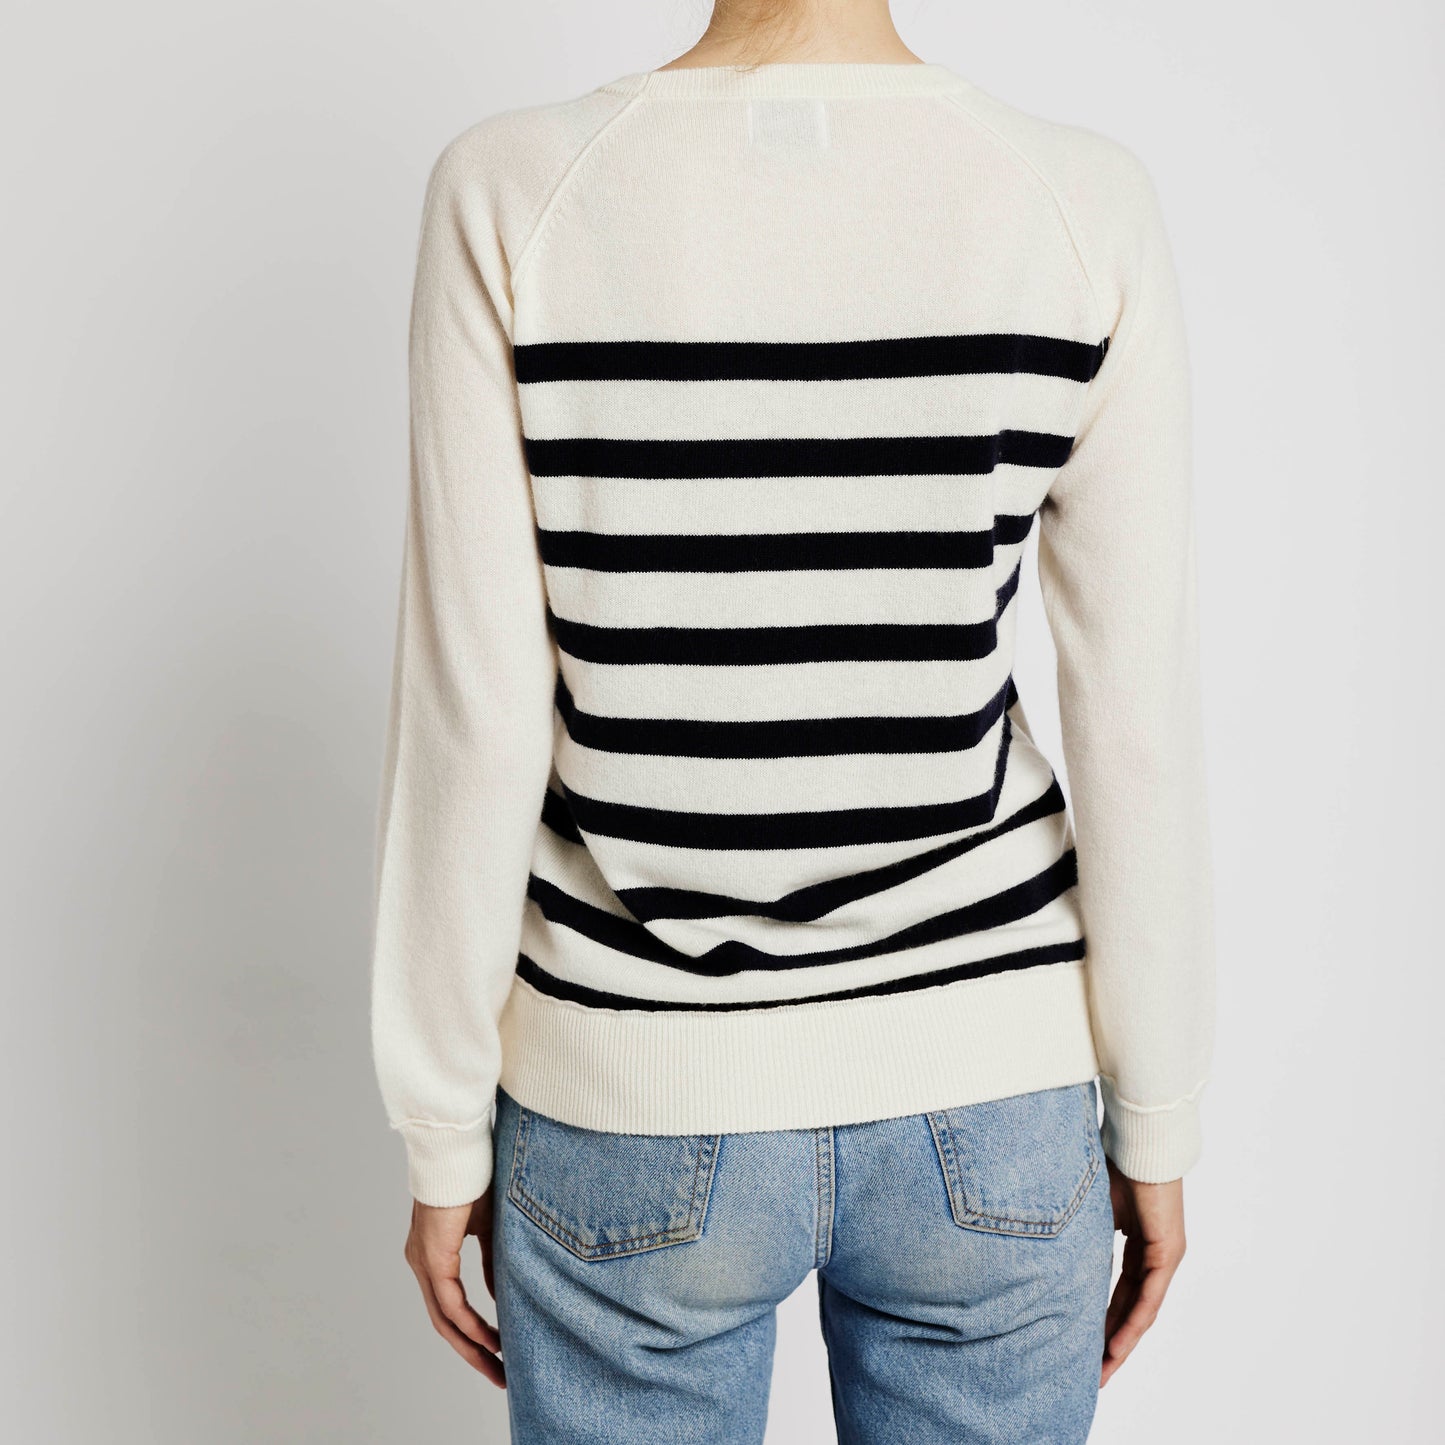 Le Breton Striped Cashmere Sweatshirt